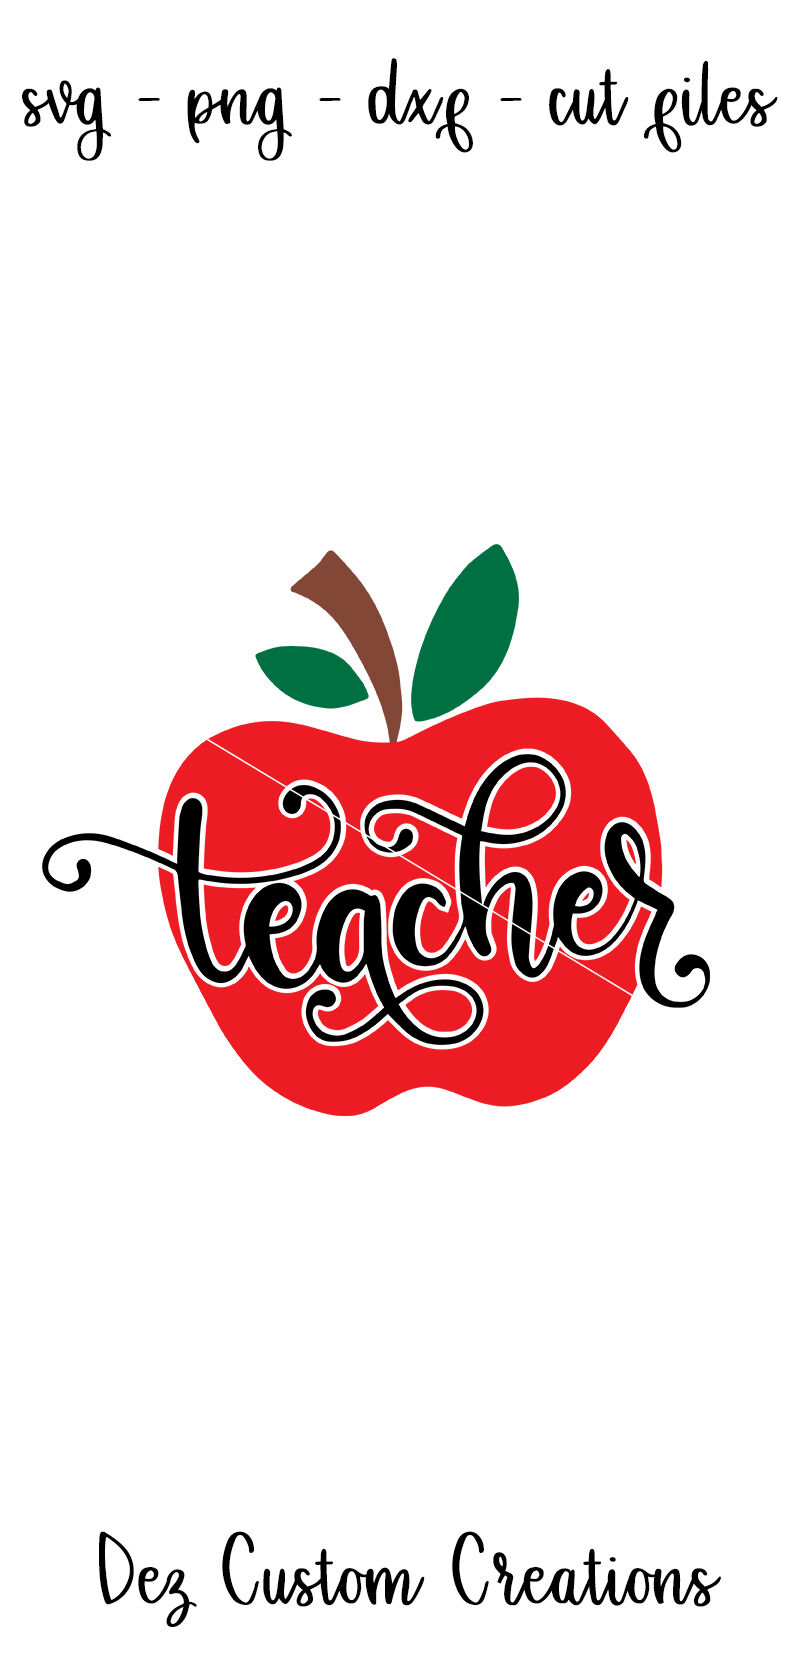 Download Teacher Apple SVG Cut File By Dez Custom Creations | TheHungryJPEG.com